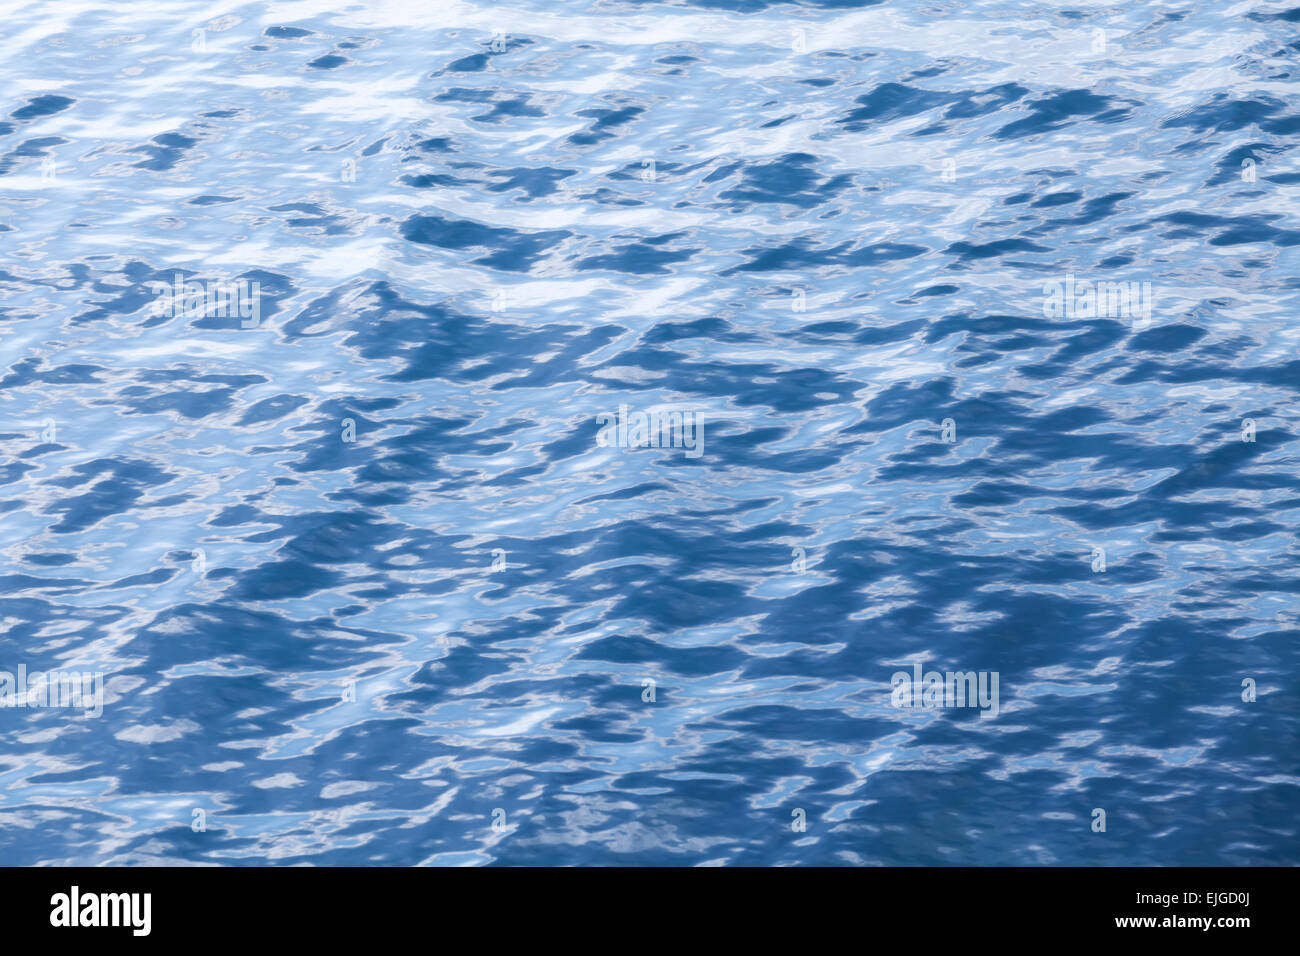 Tiefblaue Meer Wasser Hintergrundtextur mit Kräuselung Stockfoto